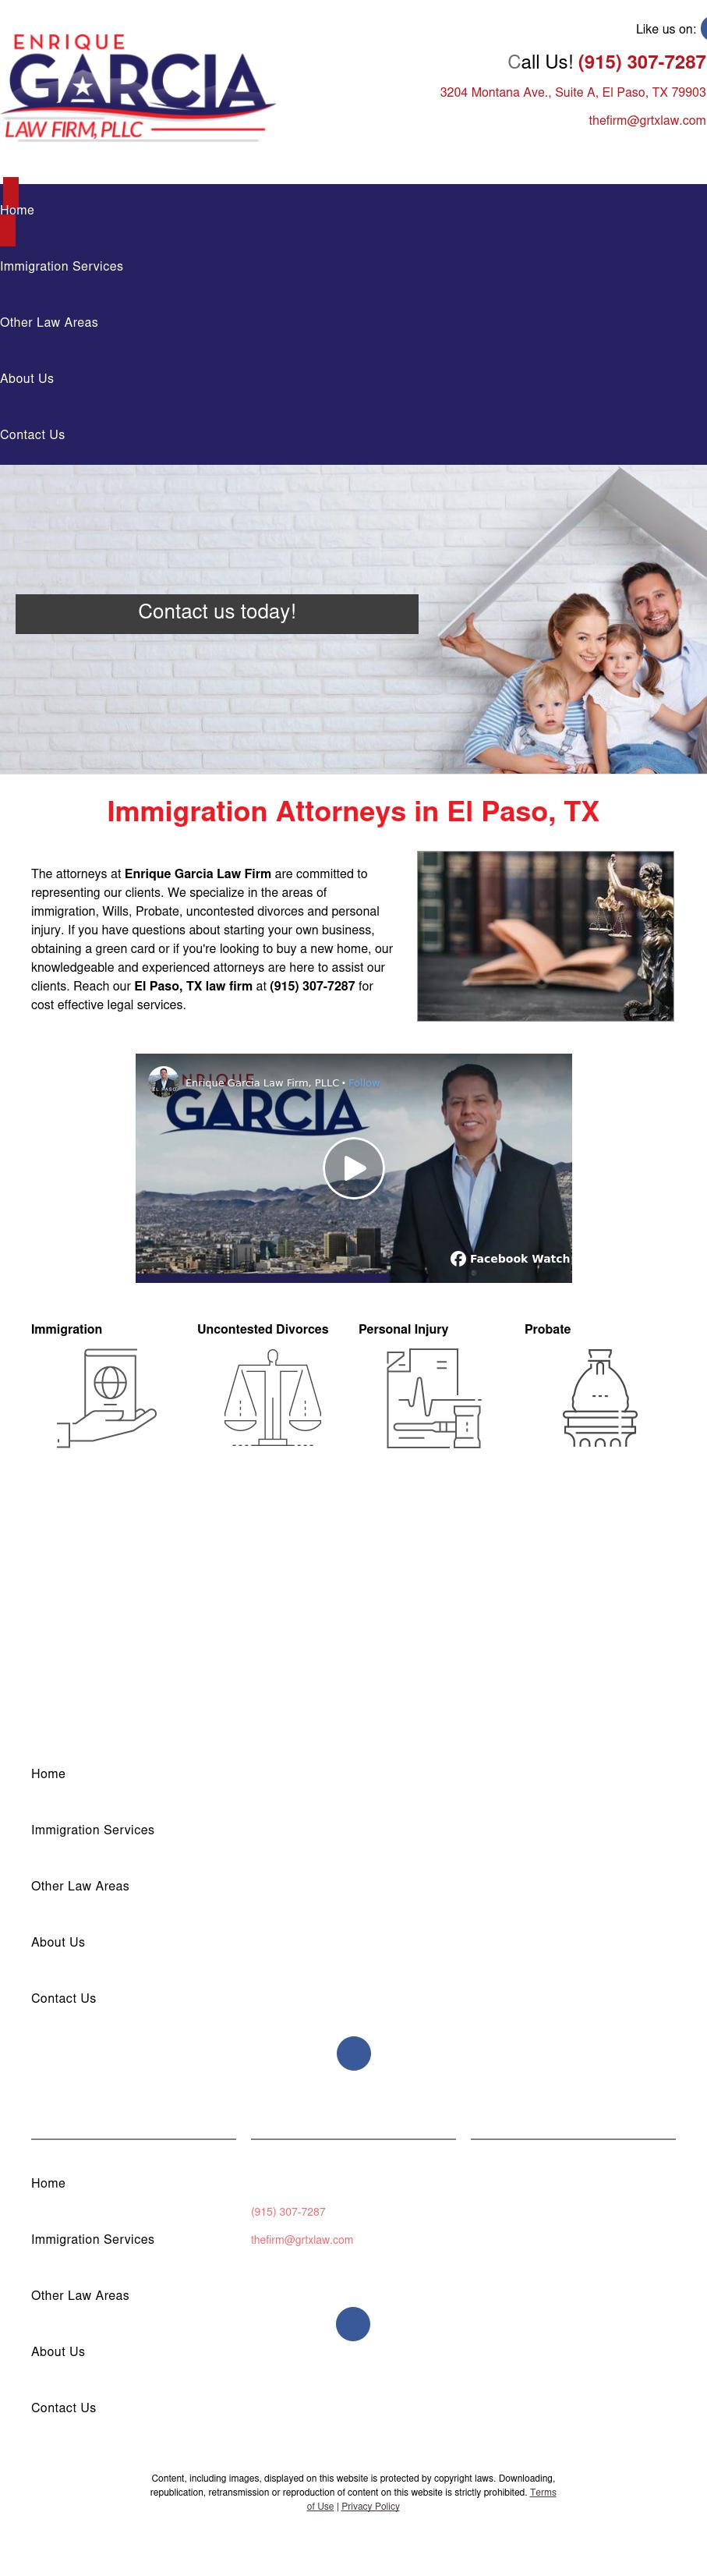 Garcia & Rebe Law Firm PLLC - El Paso TX Lawyers